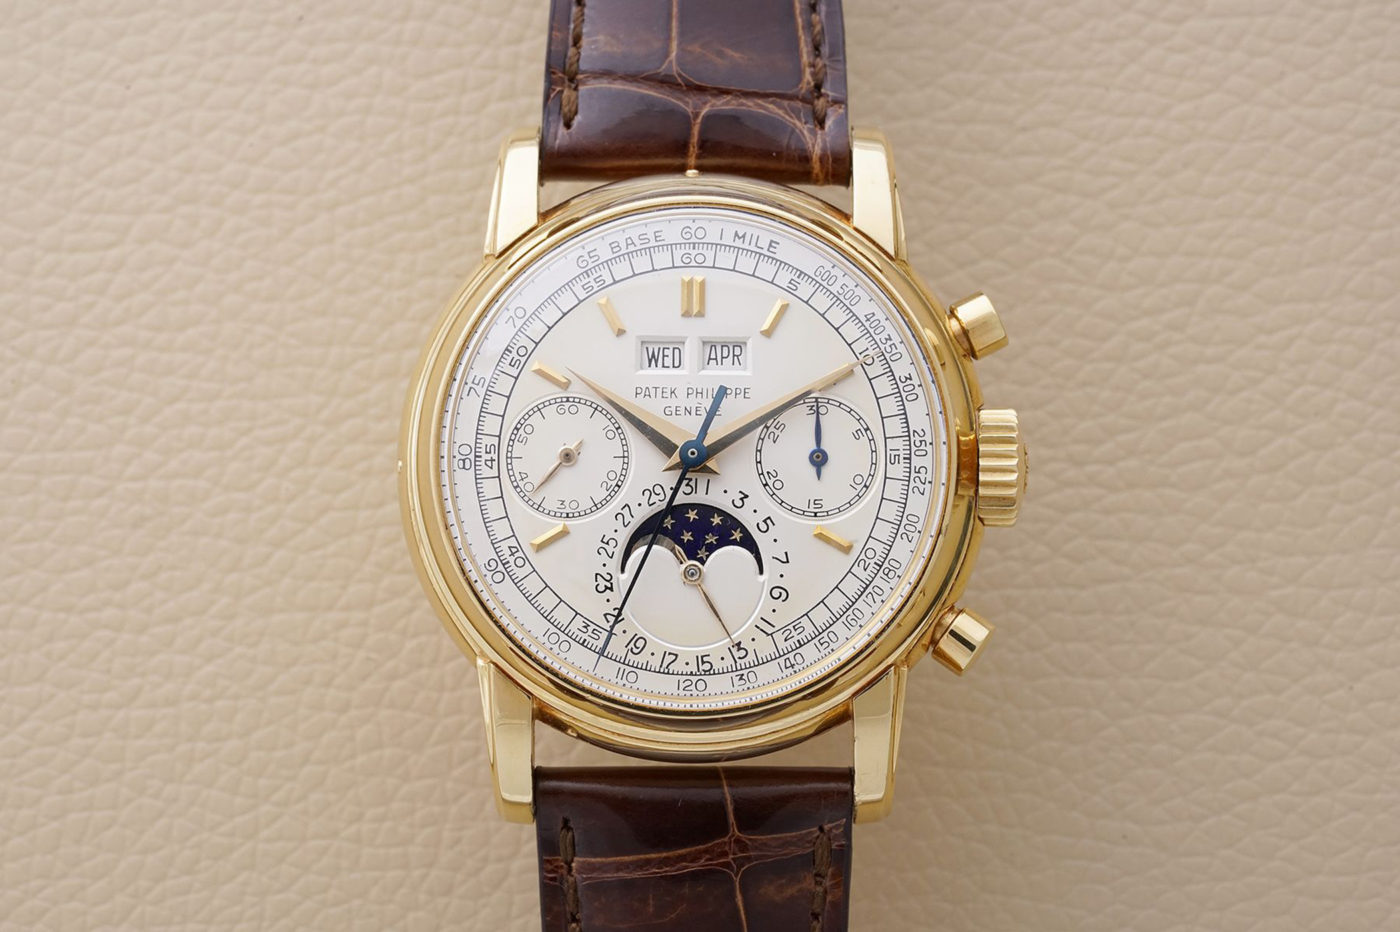 Phillips The Geneva Watch Auction: XI